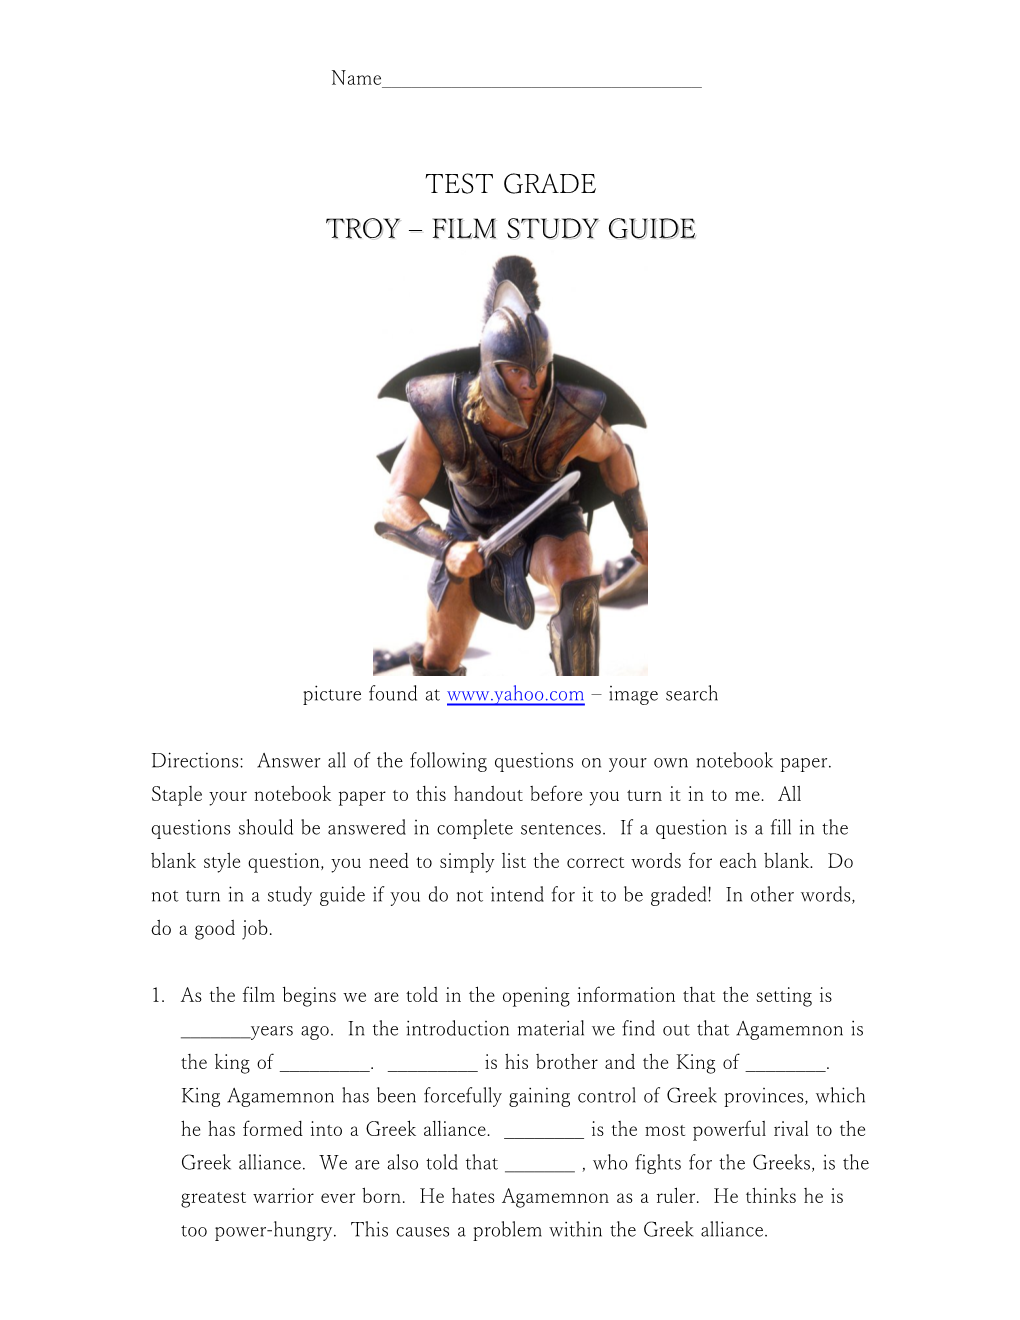 Troy Film Study Guide